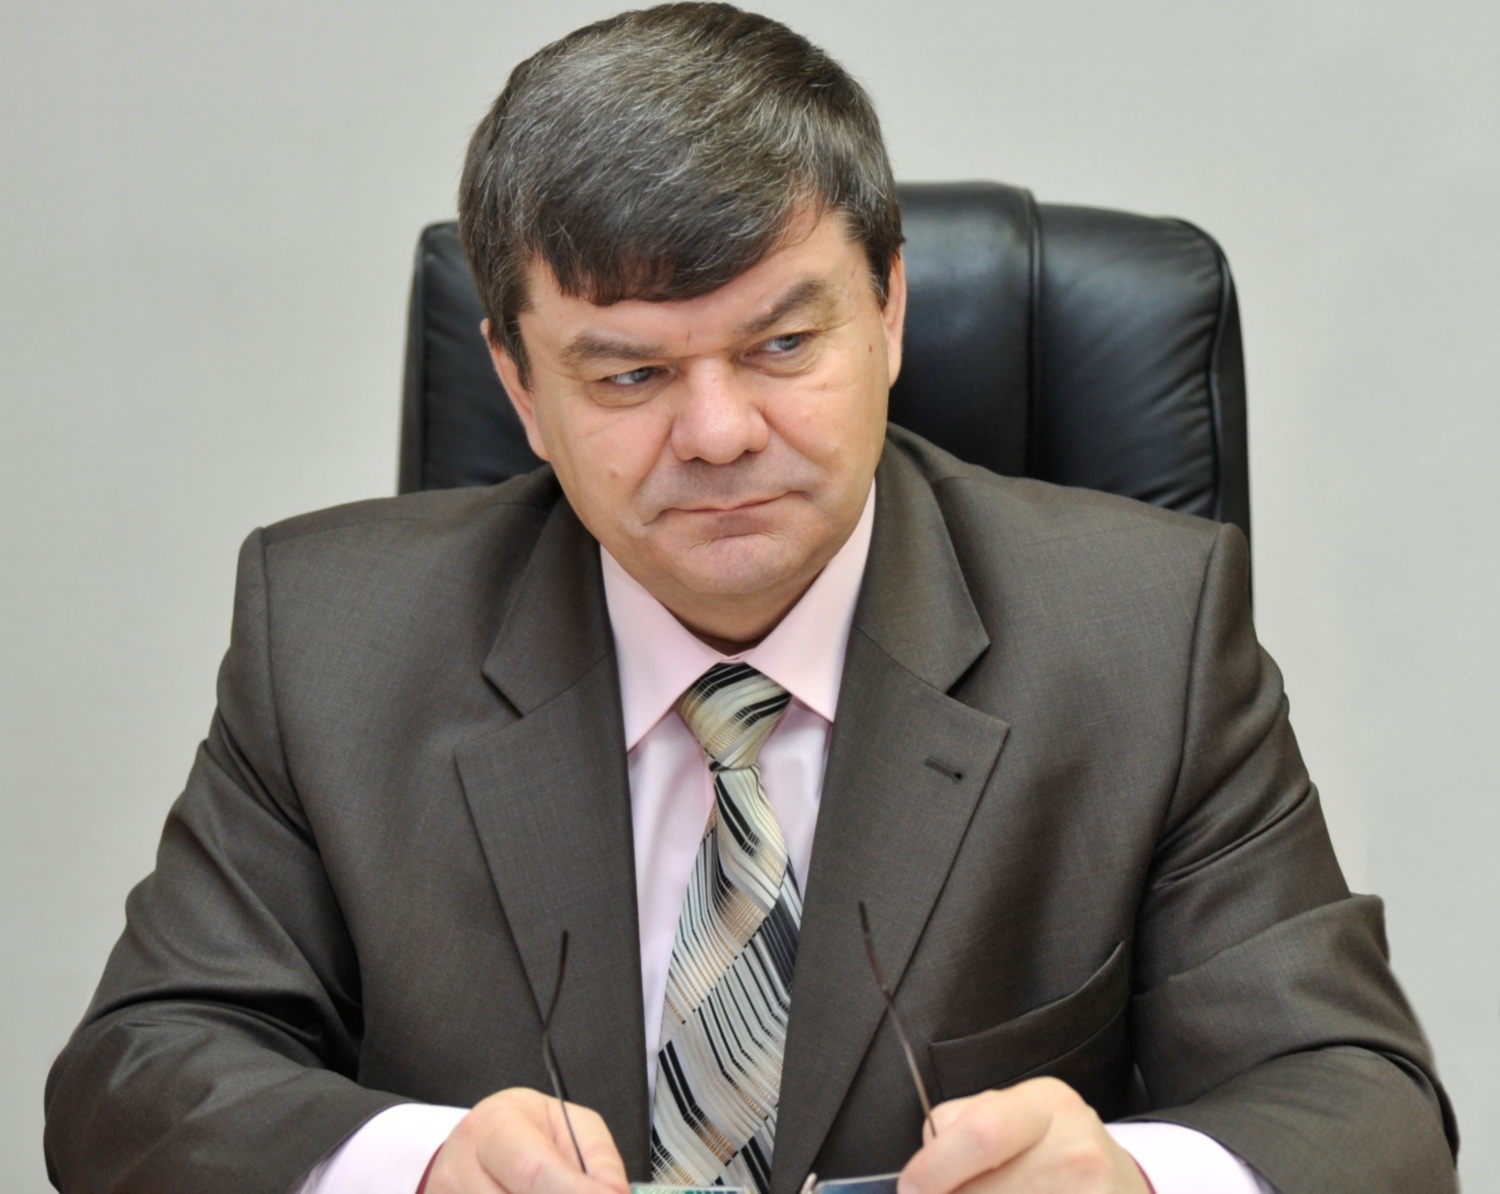 Сайт капитального ремонта омск. Директор Омского горгаза. Директор Омского нефт еперераюа.